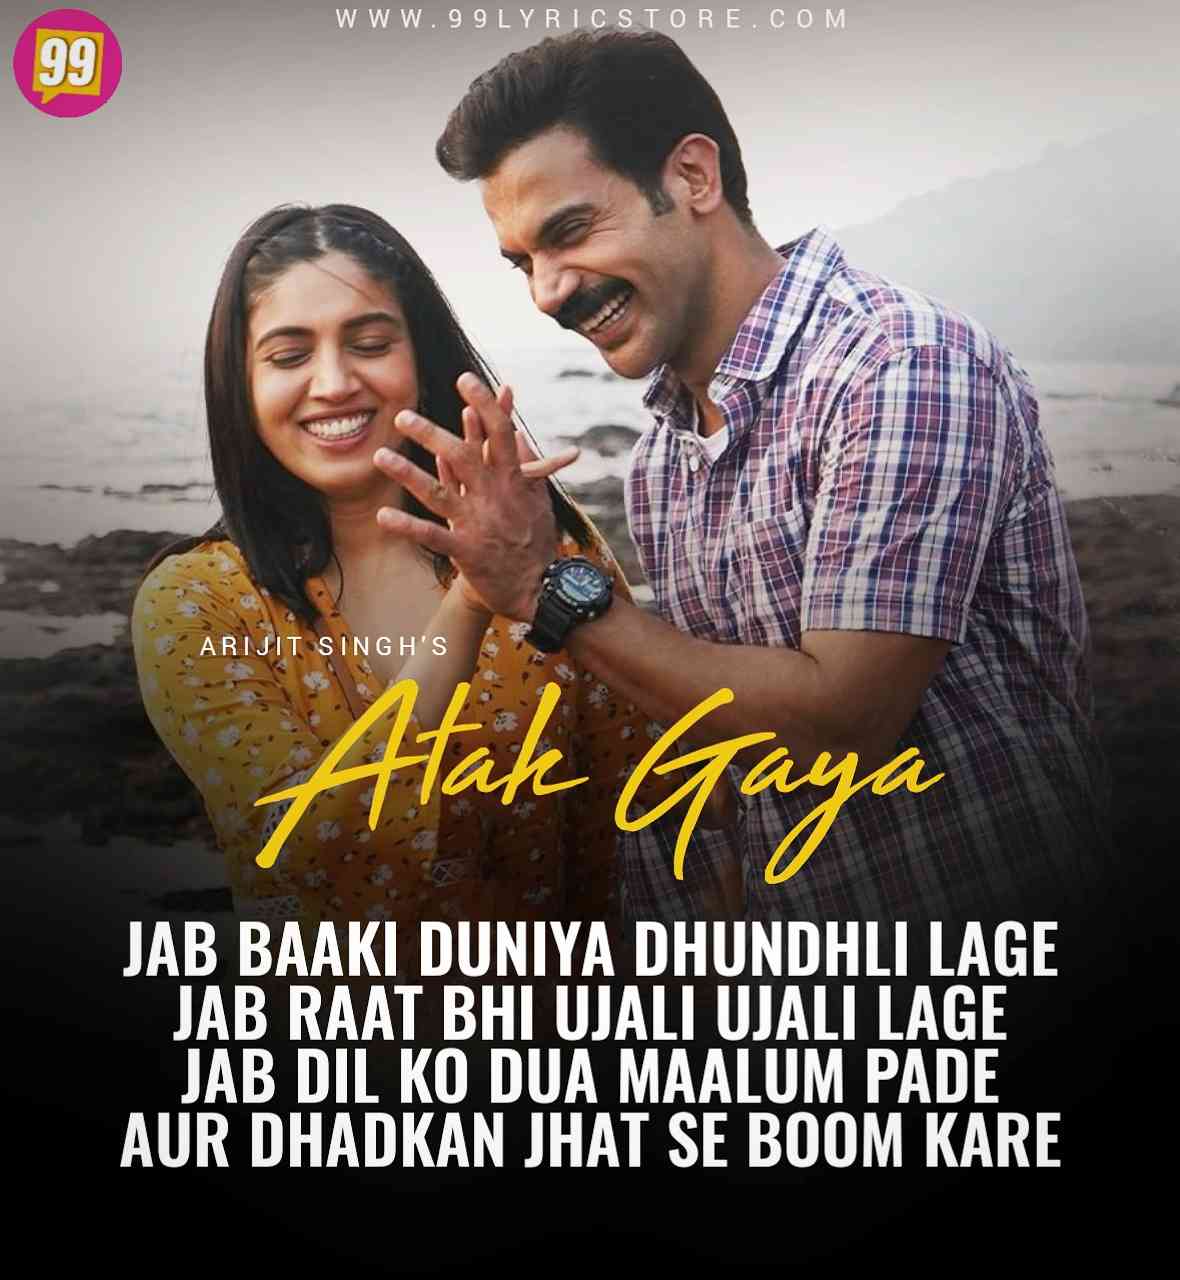 Atak Gaya Song Image From Movie Badhaai Do Sung By Arijit Singh